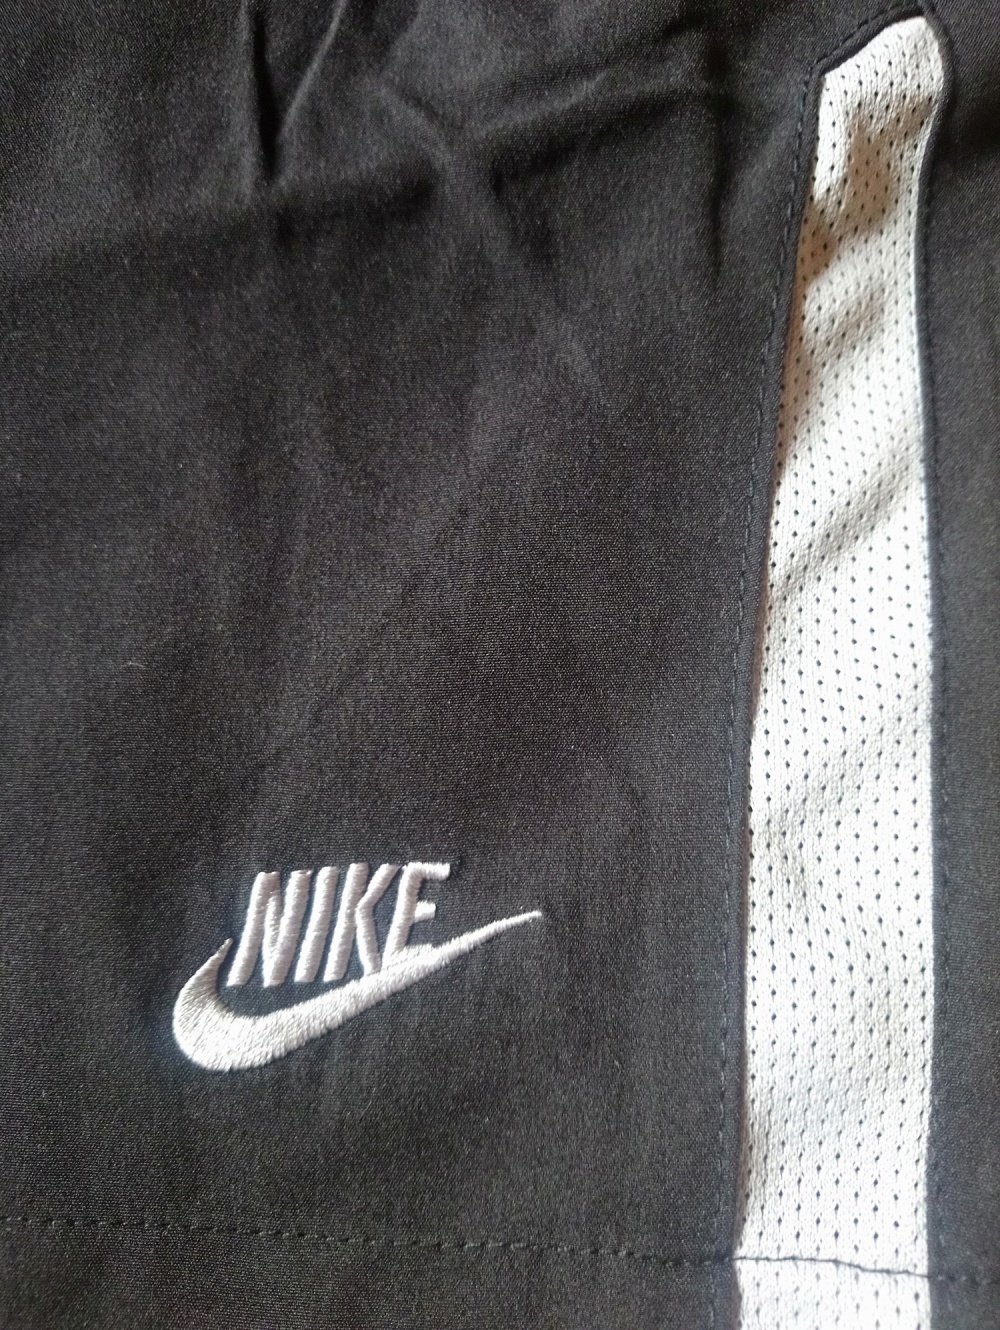 Спортивные шорты Nike, M-L